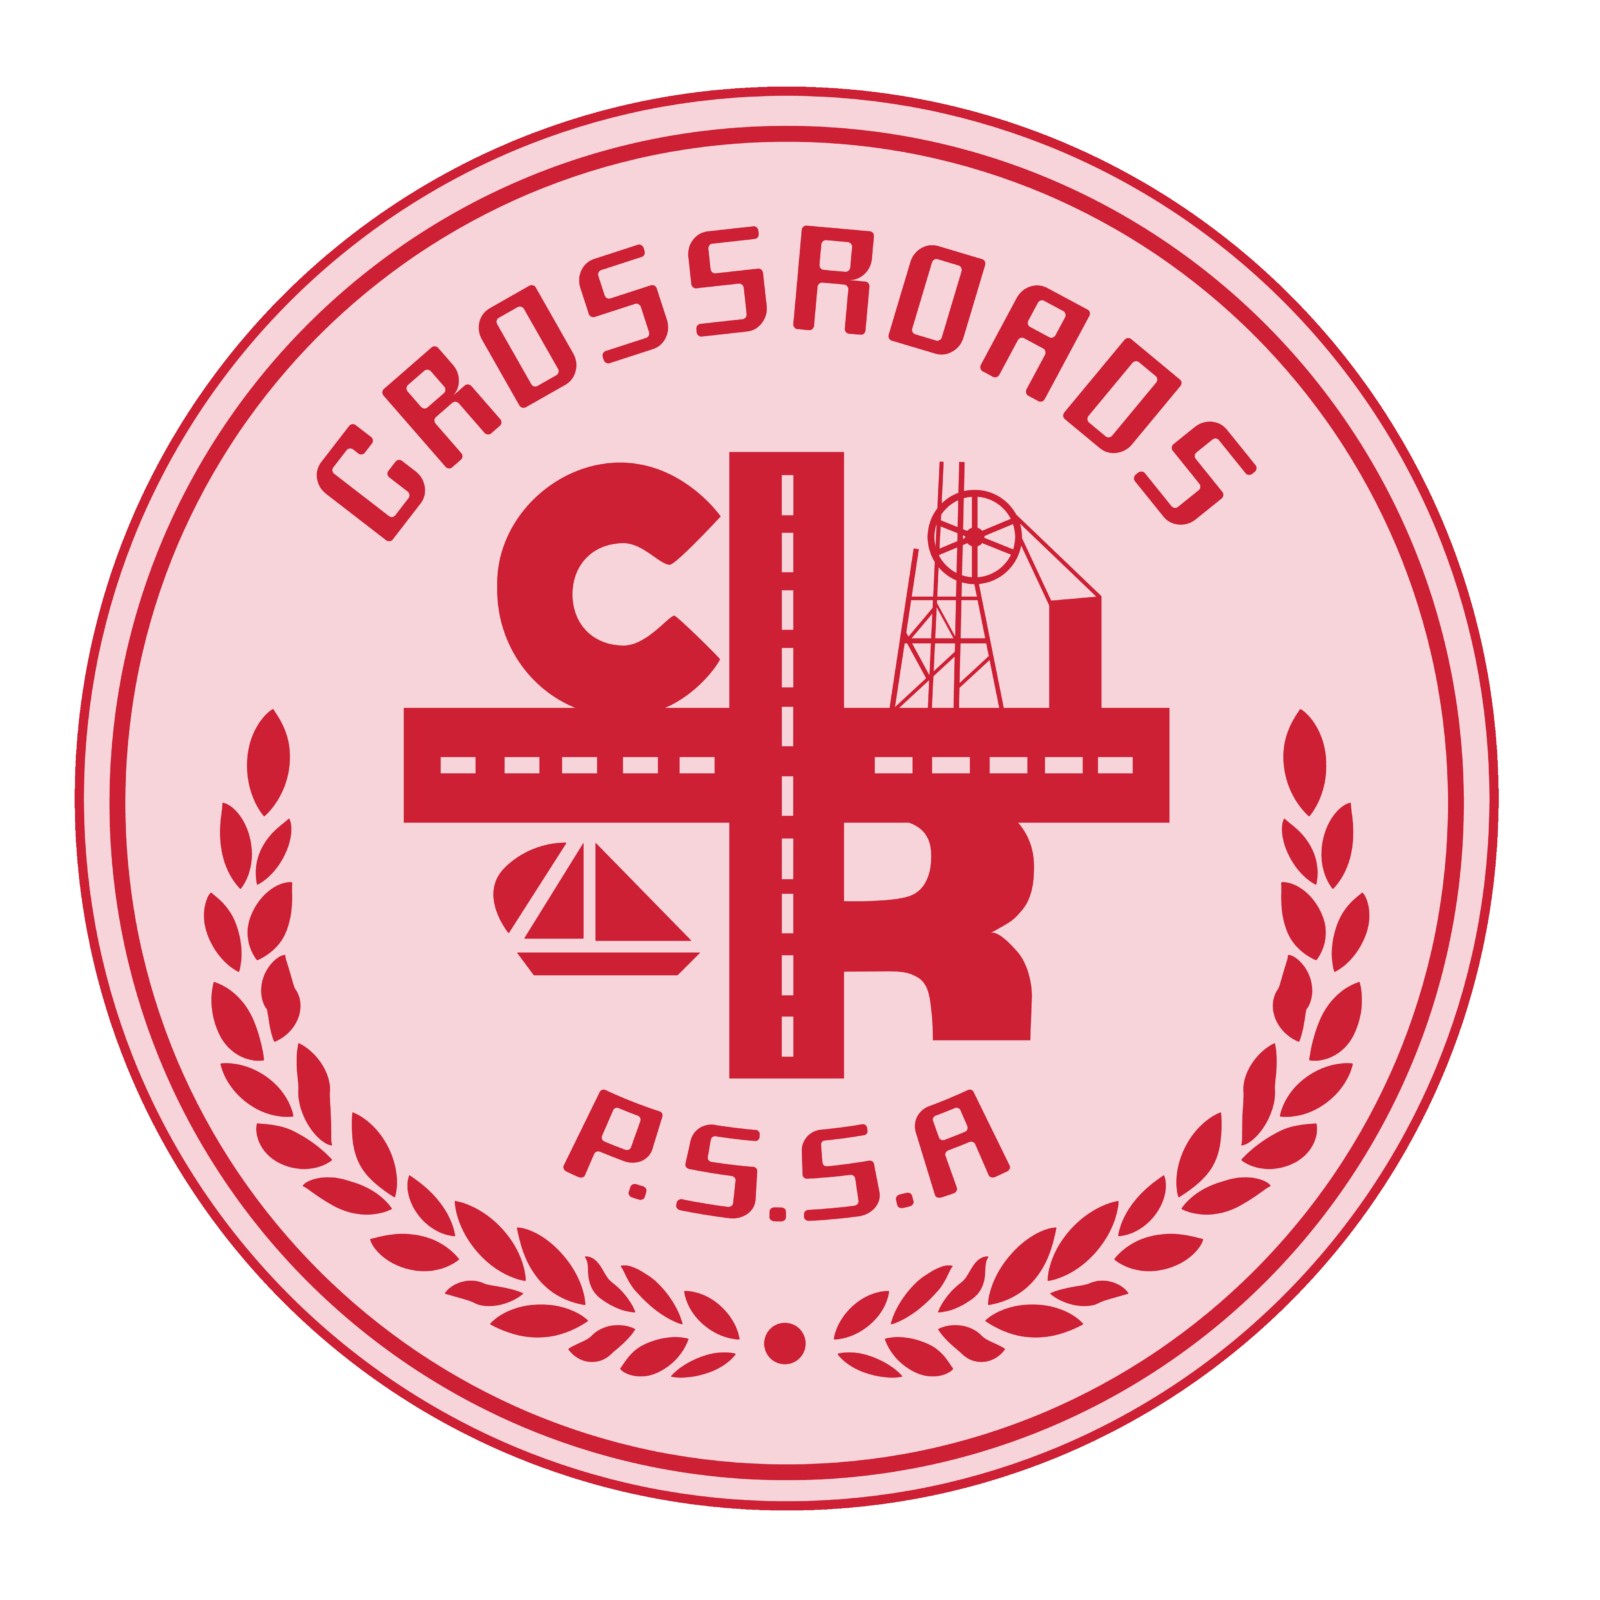 Crossroads PSSA Zone Code of Conduct